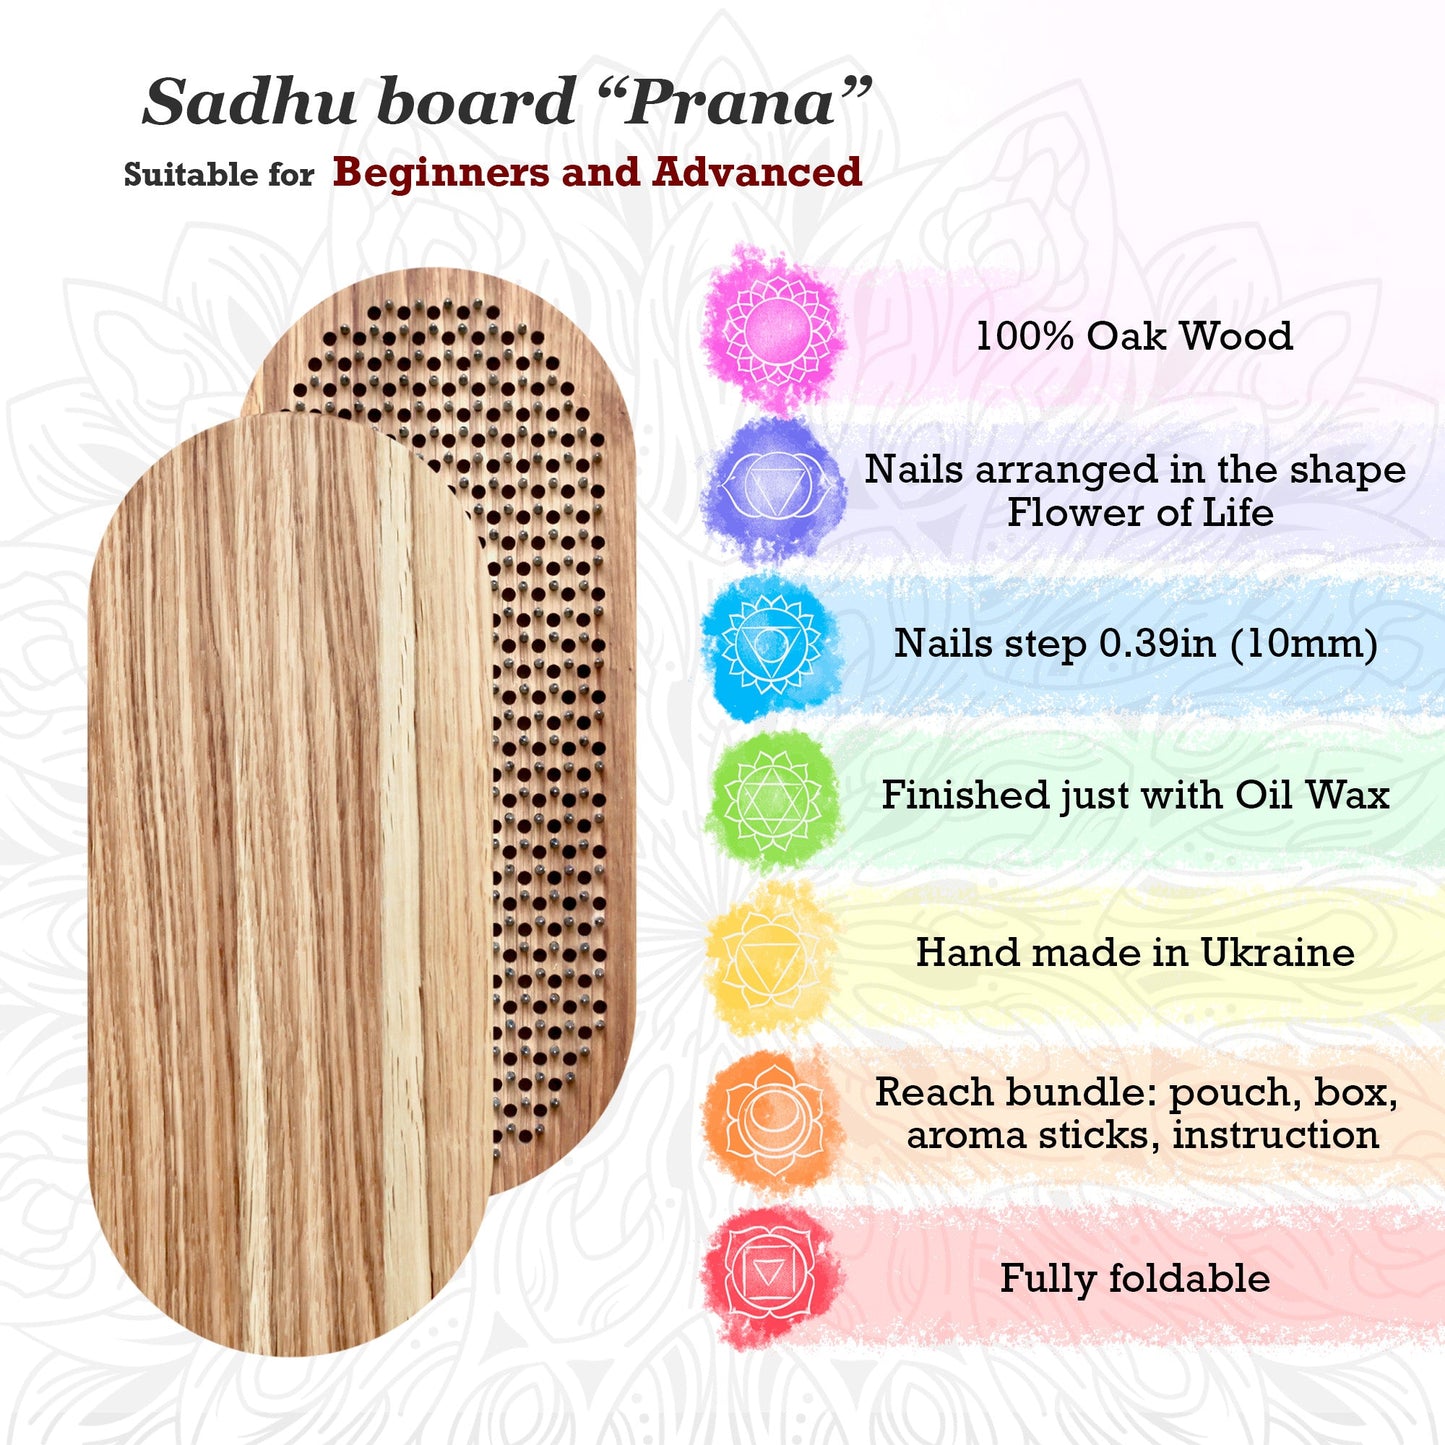 features of nails sadhu board "Prana"